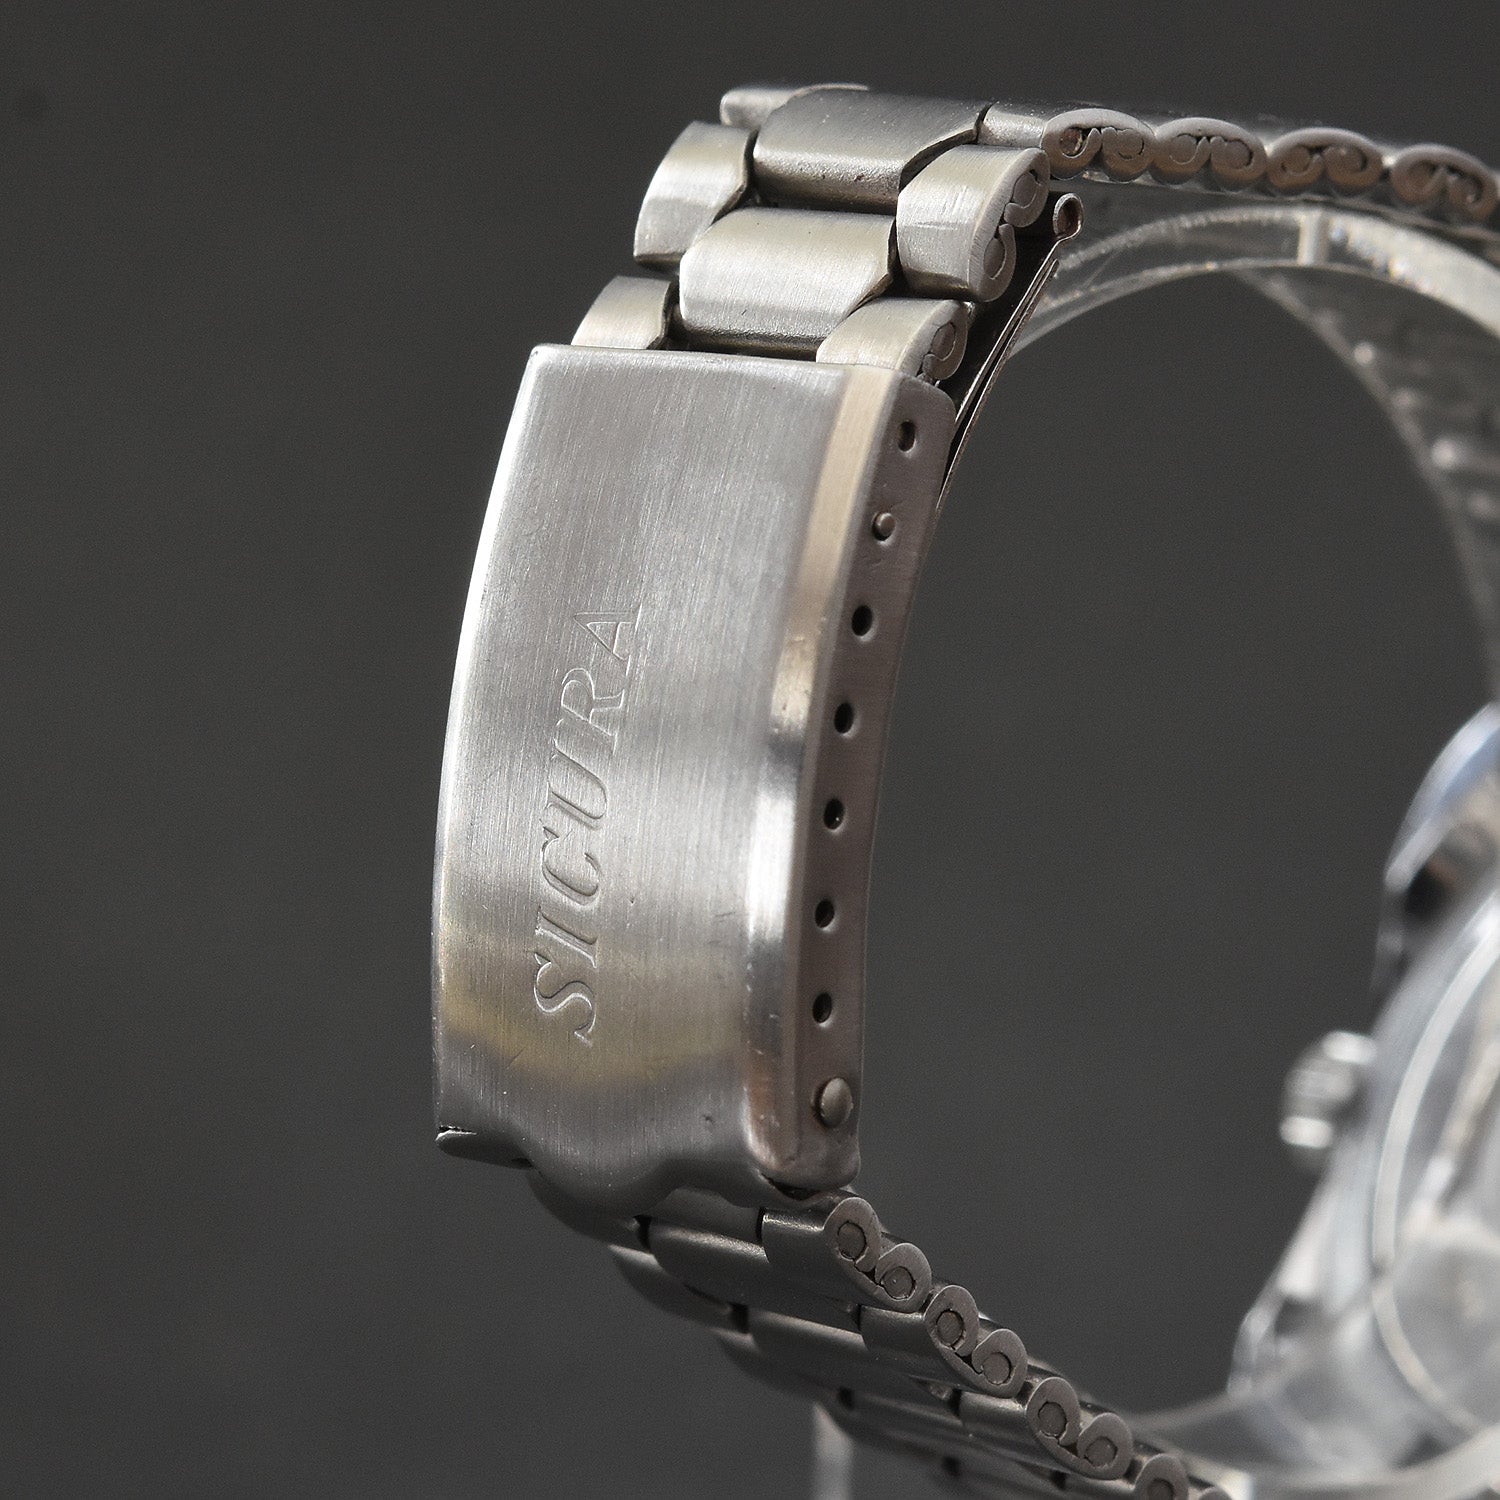 1974 SICURA Globetrotter 400m GMT World Time Swiss Vintage Watch